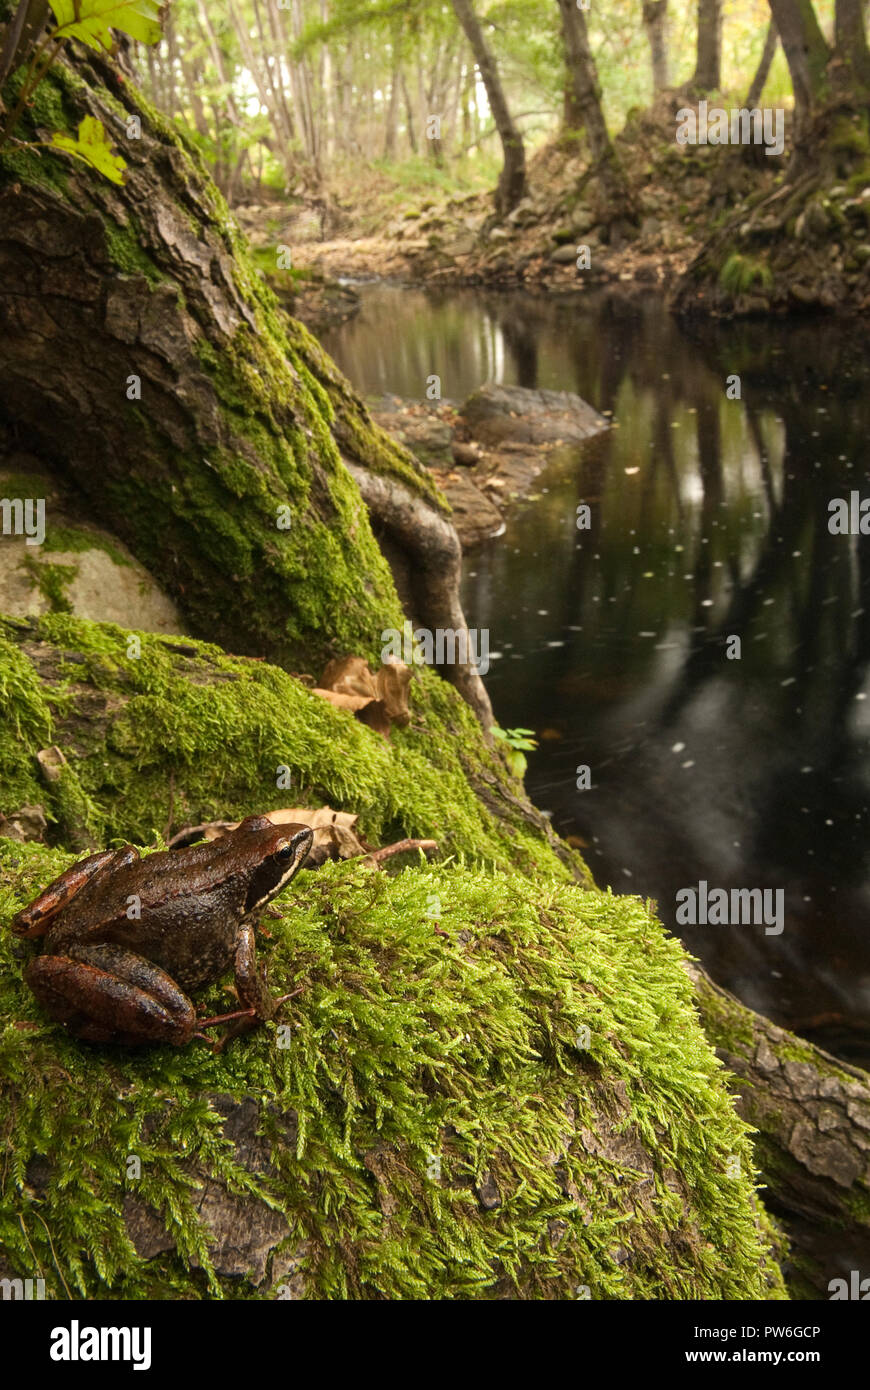 Iberian frog, leggy frog, on the riverbank, aquatic fauna Stock Photo